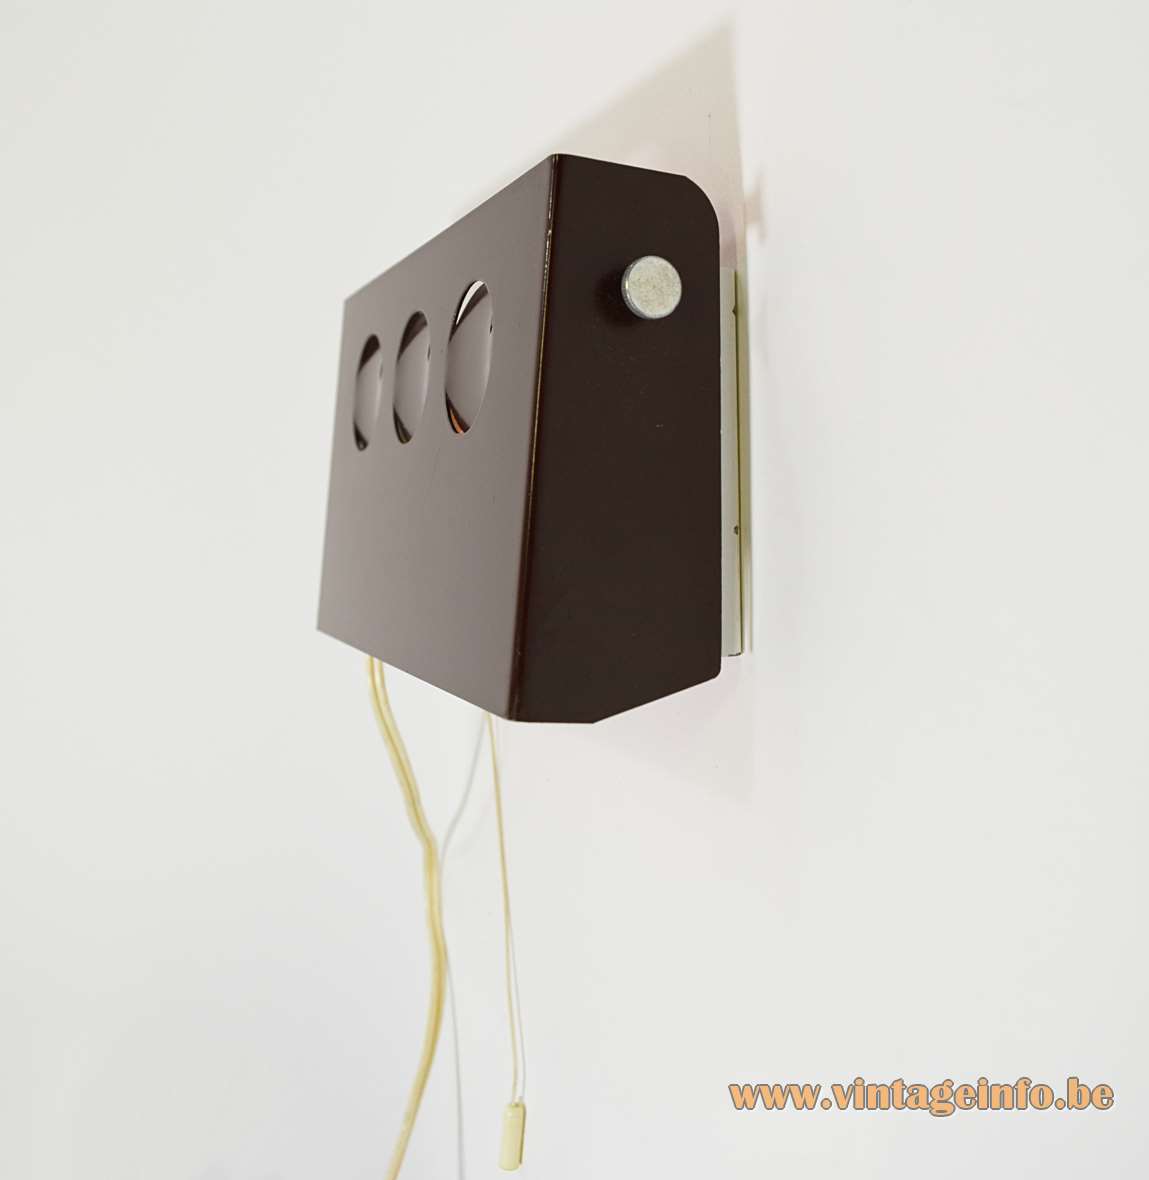 1960s rectangular wall lamp white base brown perforated metal lampshade Raak The Netherlands E14 lamp socket